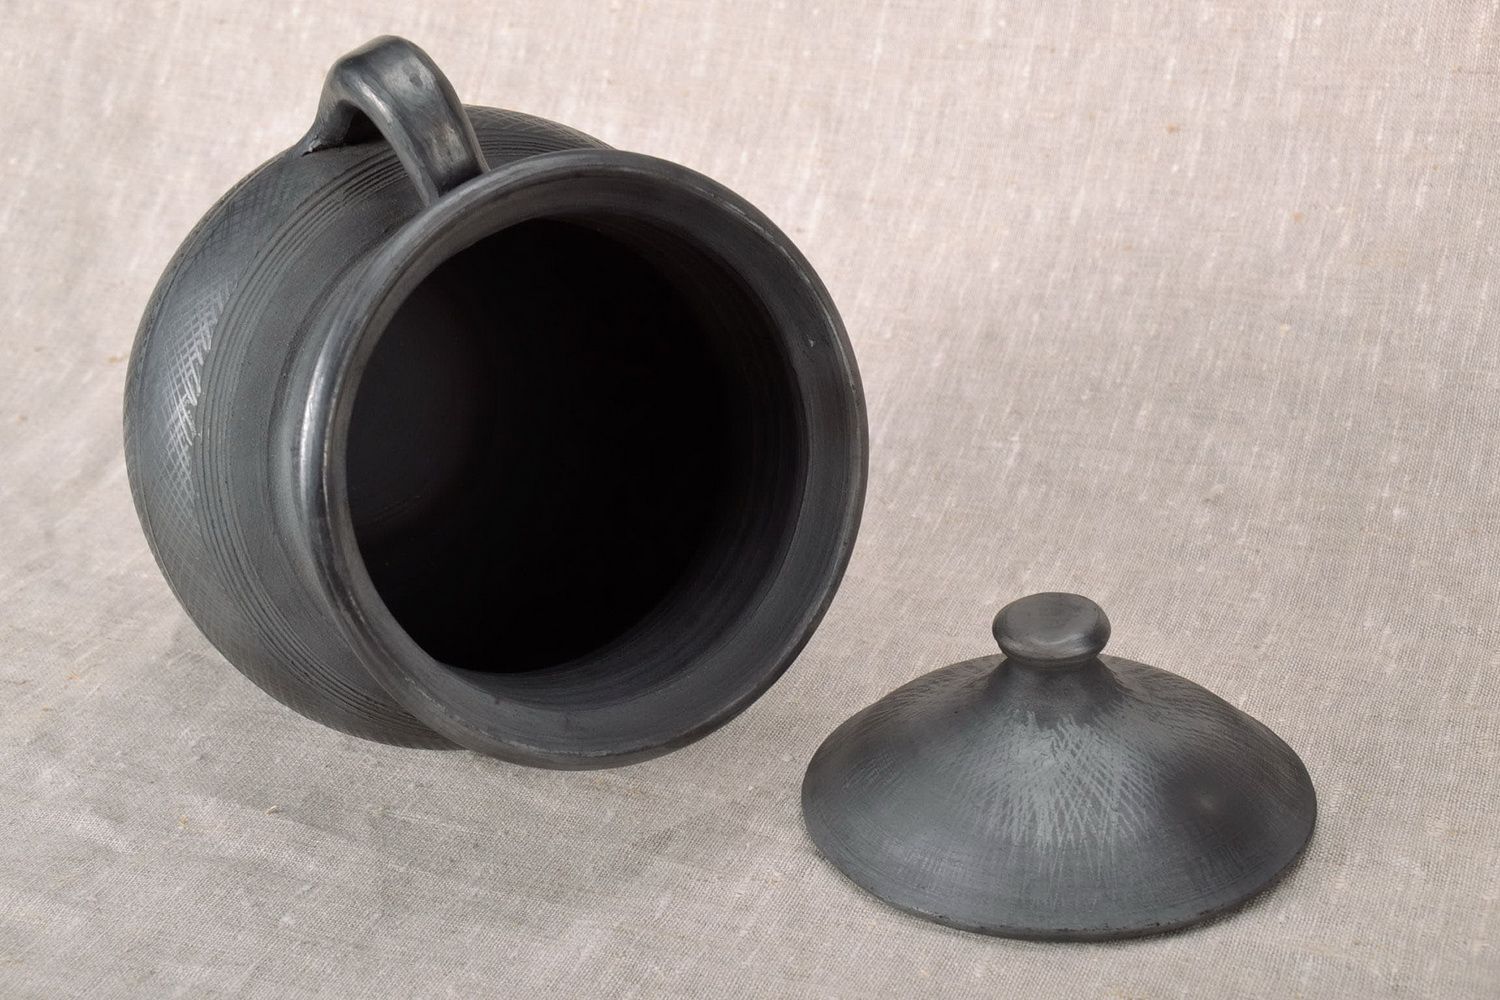 60 oz ceramic milk jug with handle and lid in black color 2,5 lb photo 4